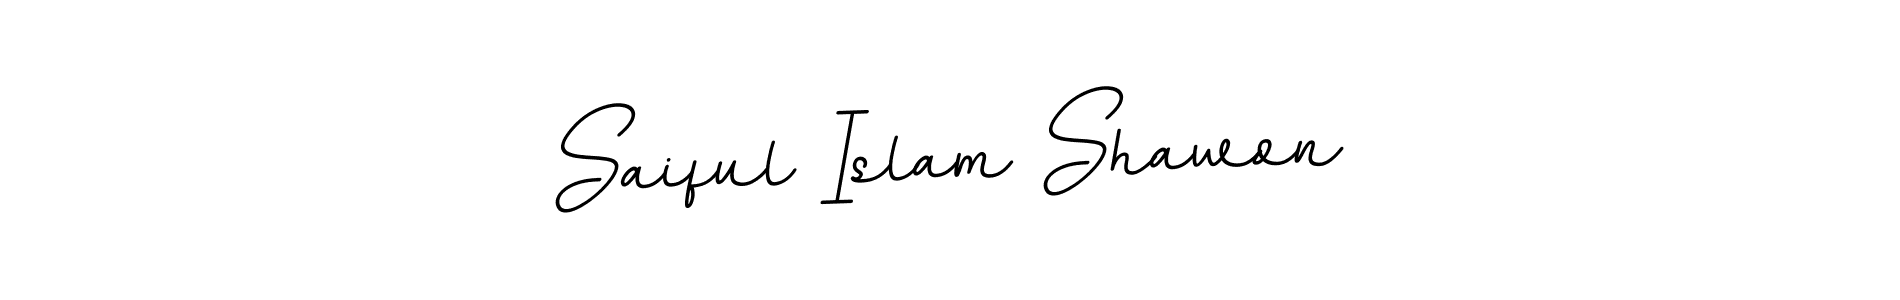 How to Draw Saiful Islam Shawon signature style? BallpointsItalic-DORy9 is a latest design signature styles for name Saiful Islam Shawon. Saiful Islam Shawon signature style 11 images and pictures png